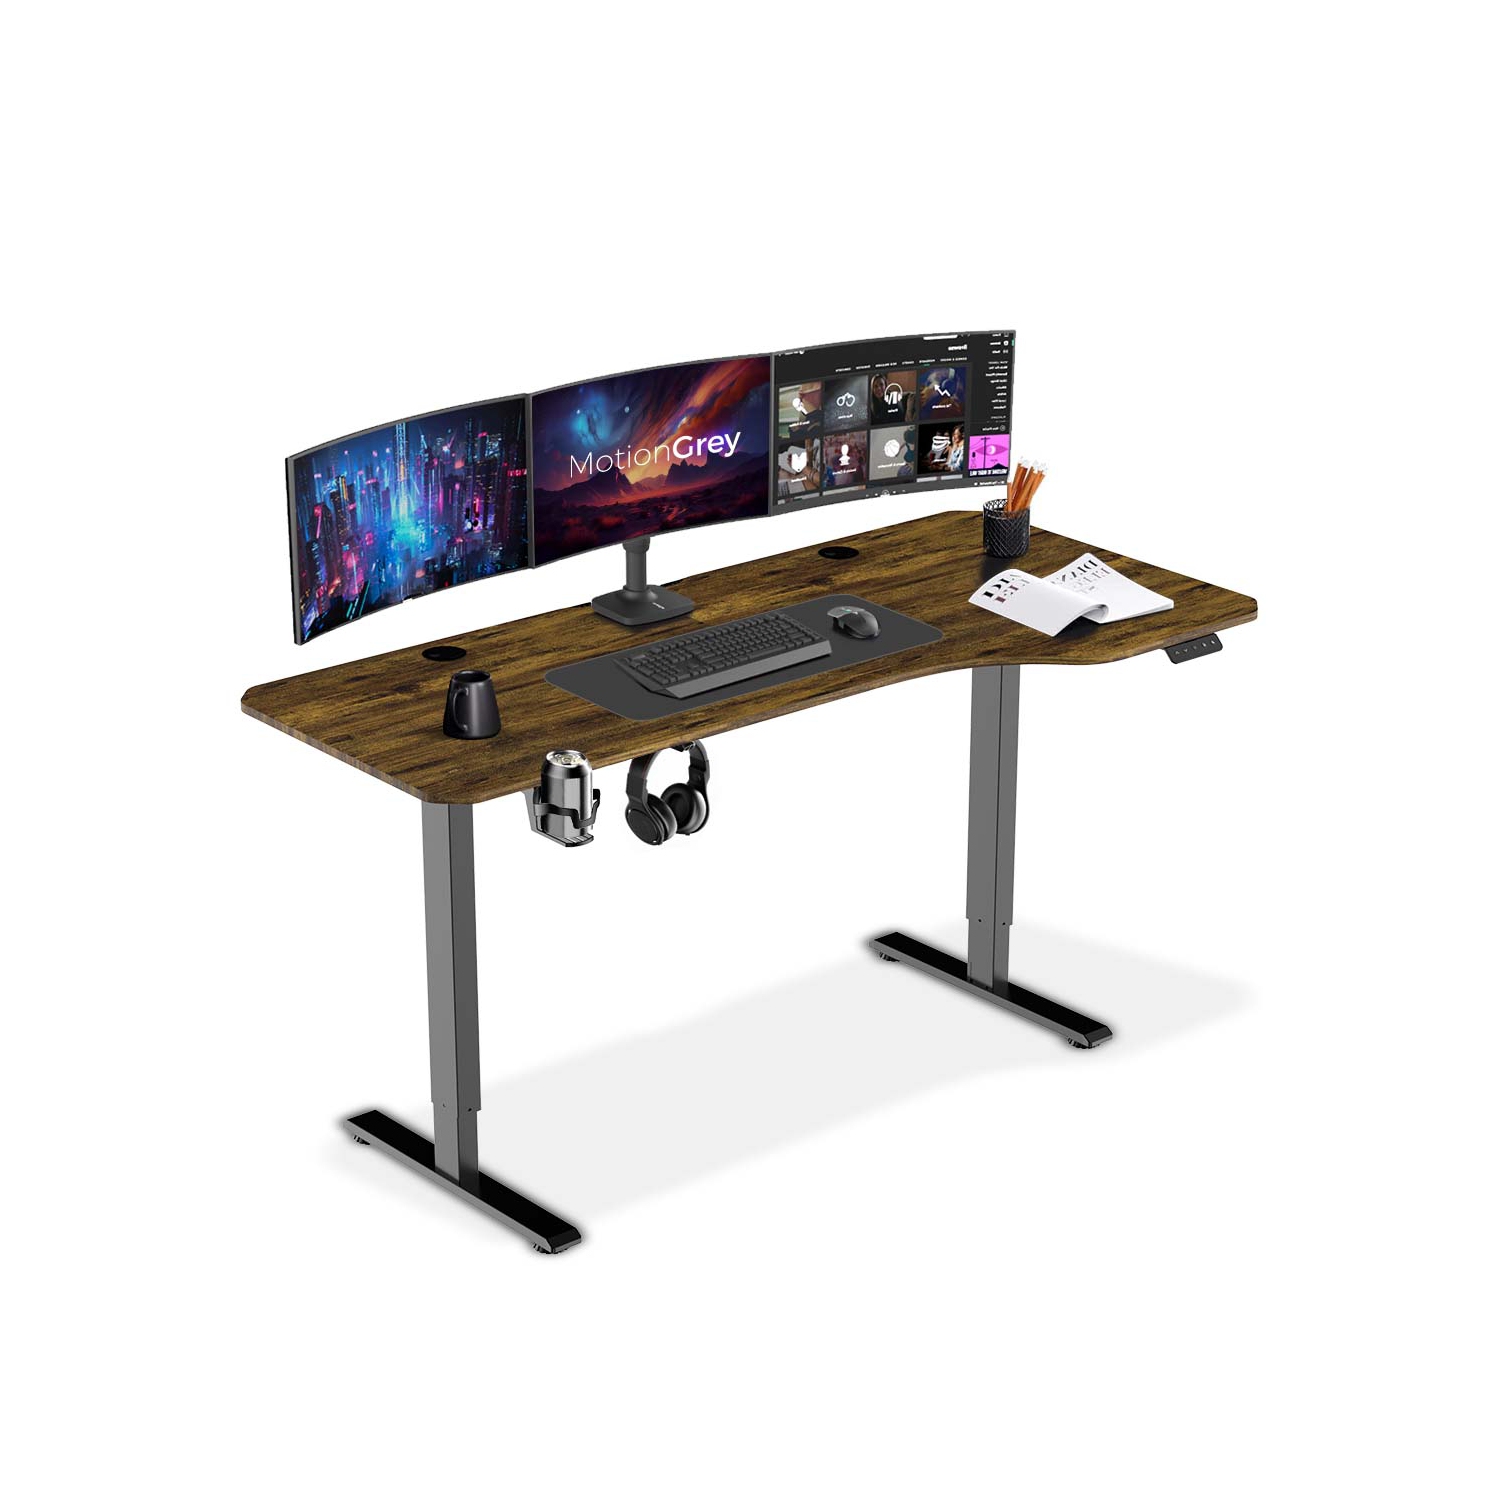 MotionGrey - Height Adjustable L Shaped Standing Desk, 160x60cm, Corner Desk, L Shape Desk, Computer Electric Sit Stand Desk Stand - Motorized Frame Right Top (Rustic Brown, 63x24)